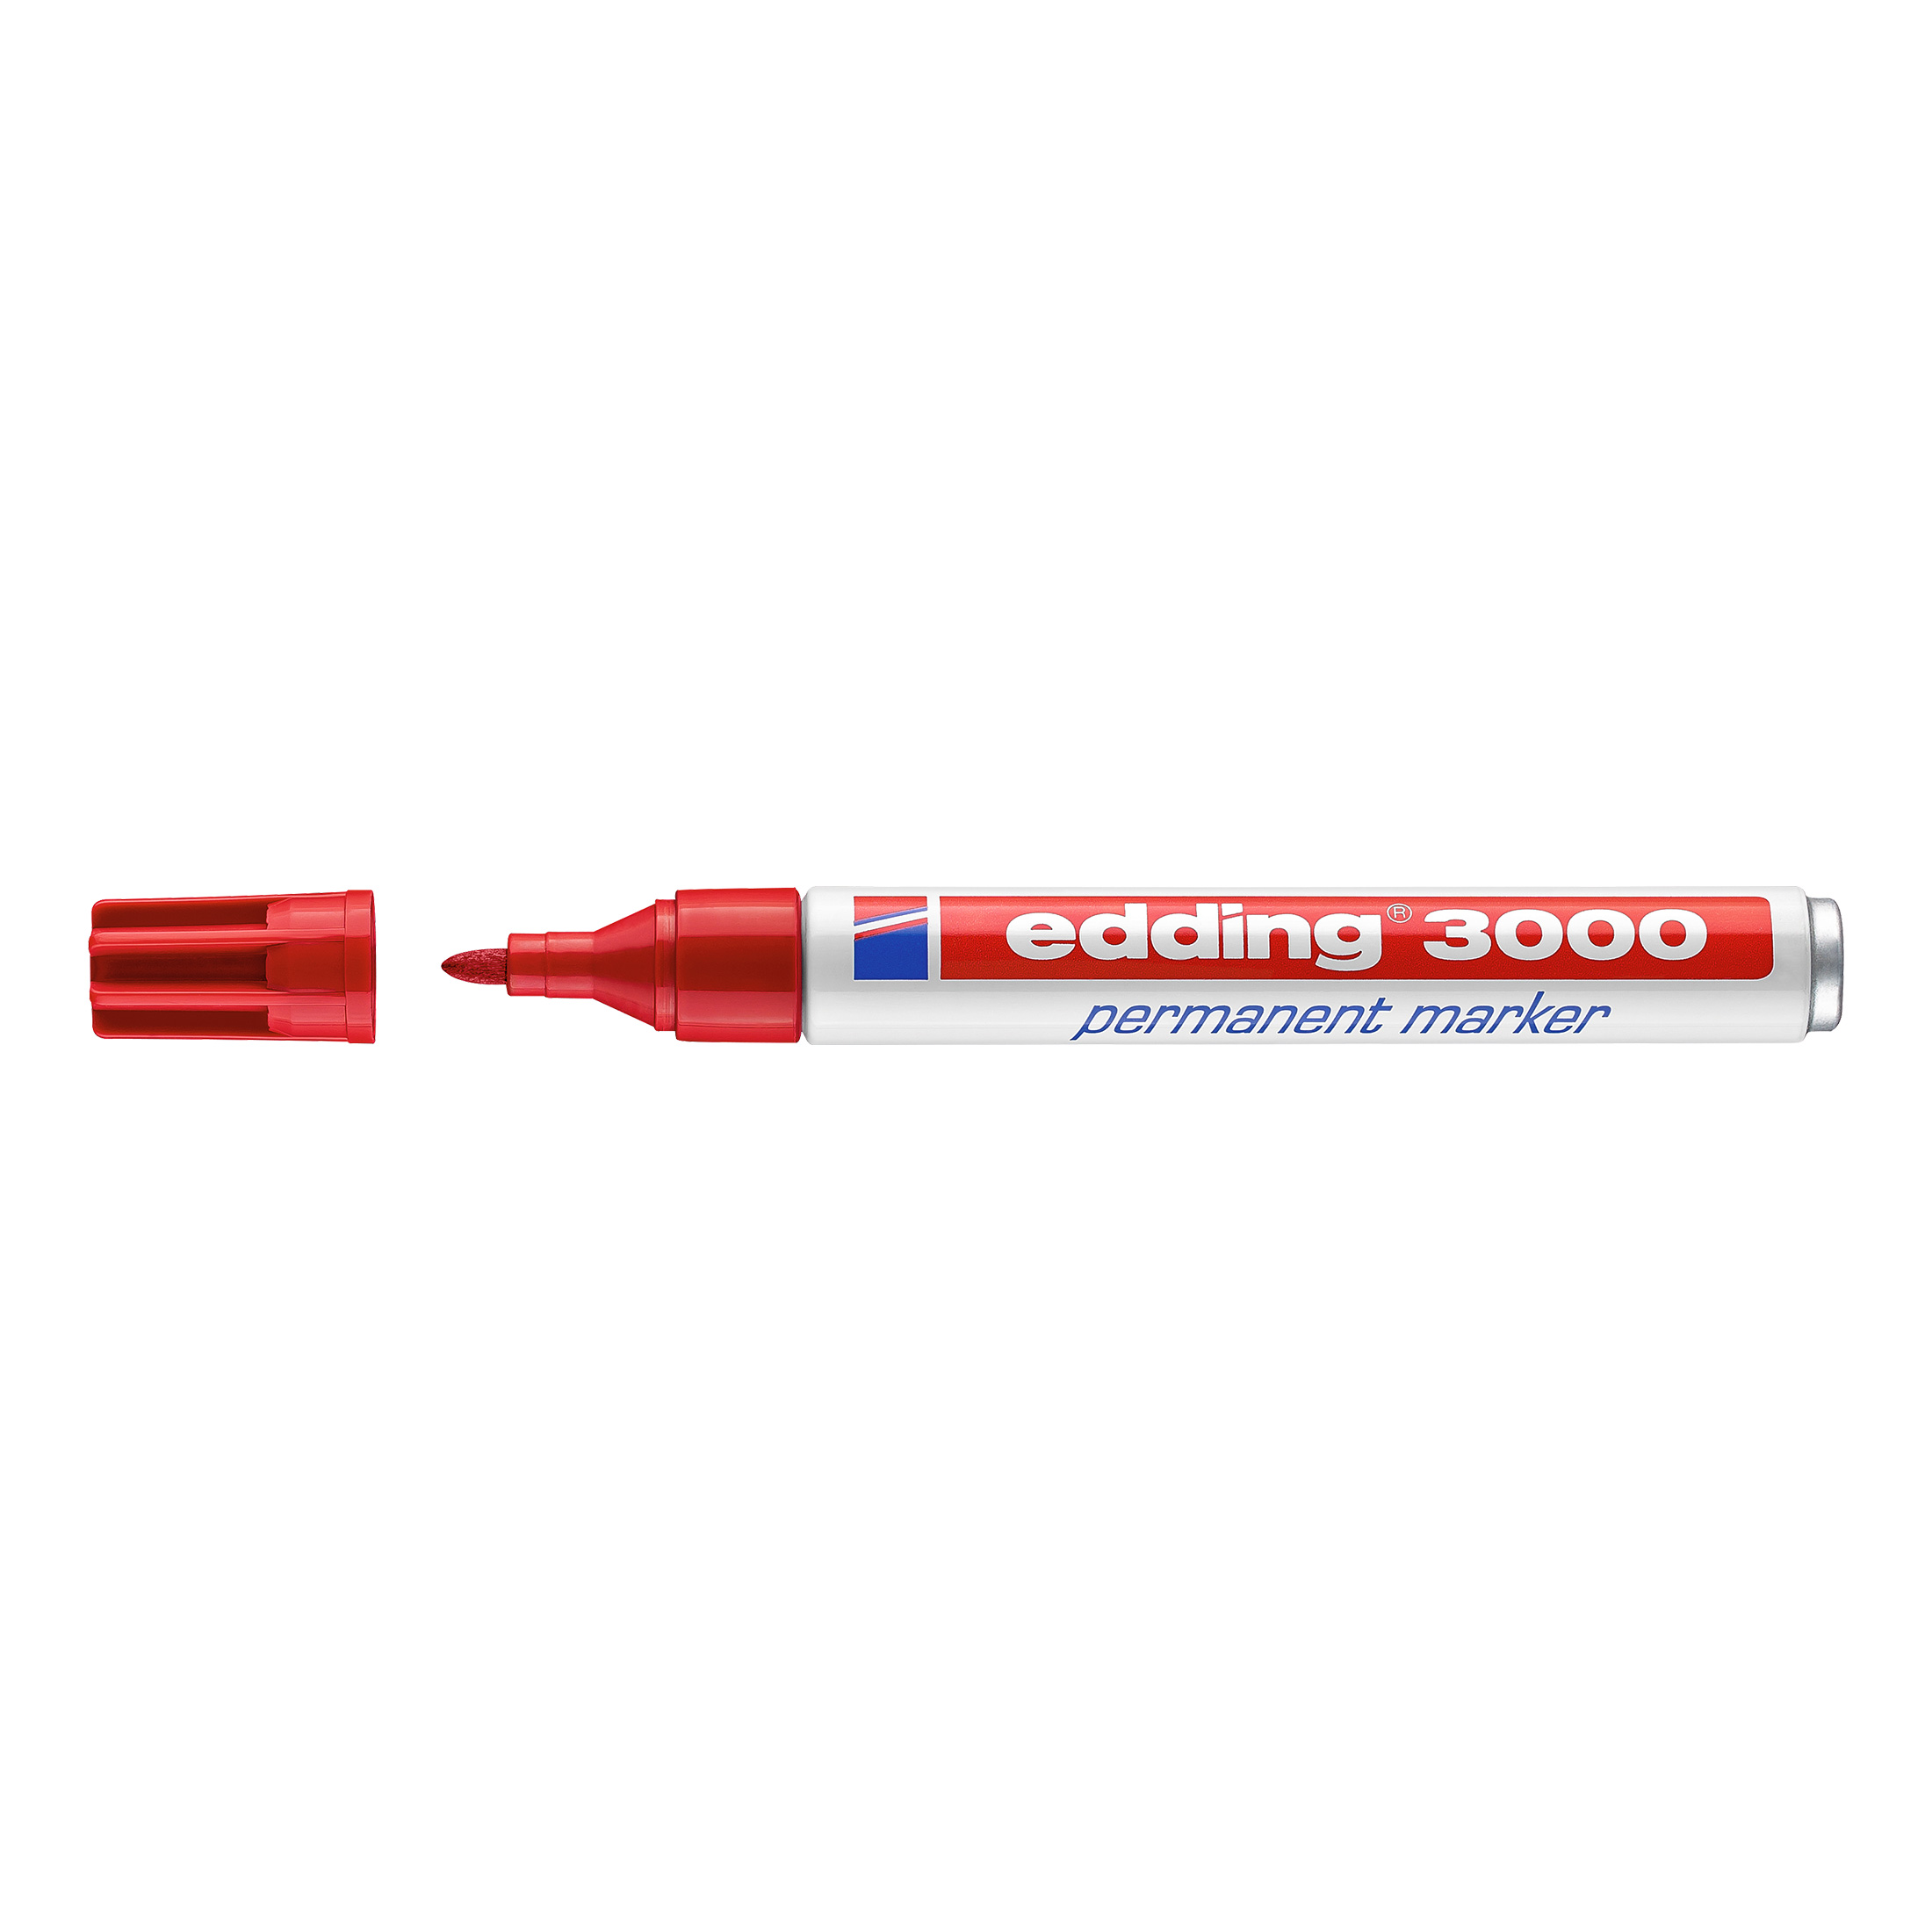 Edding 3000 permanent marker red